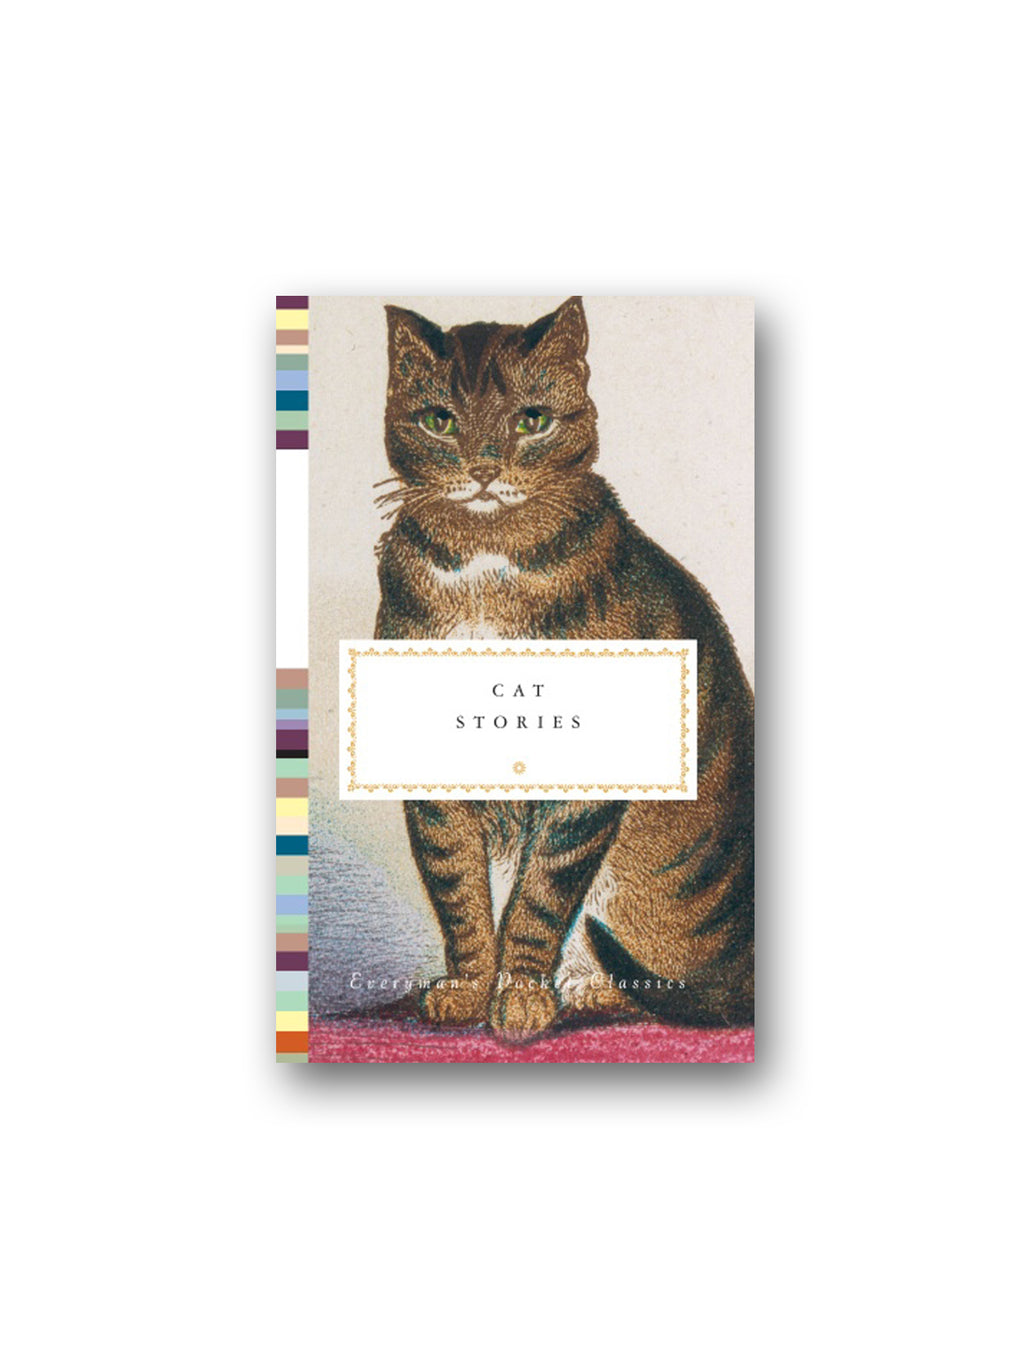 Cat Stories - Everyman's Library Pocket Classics